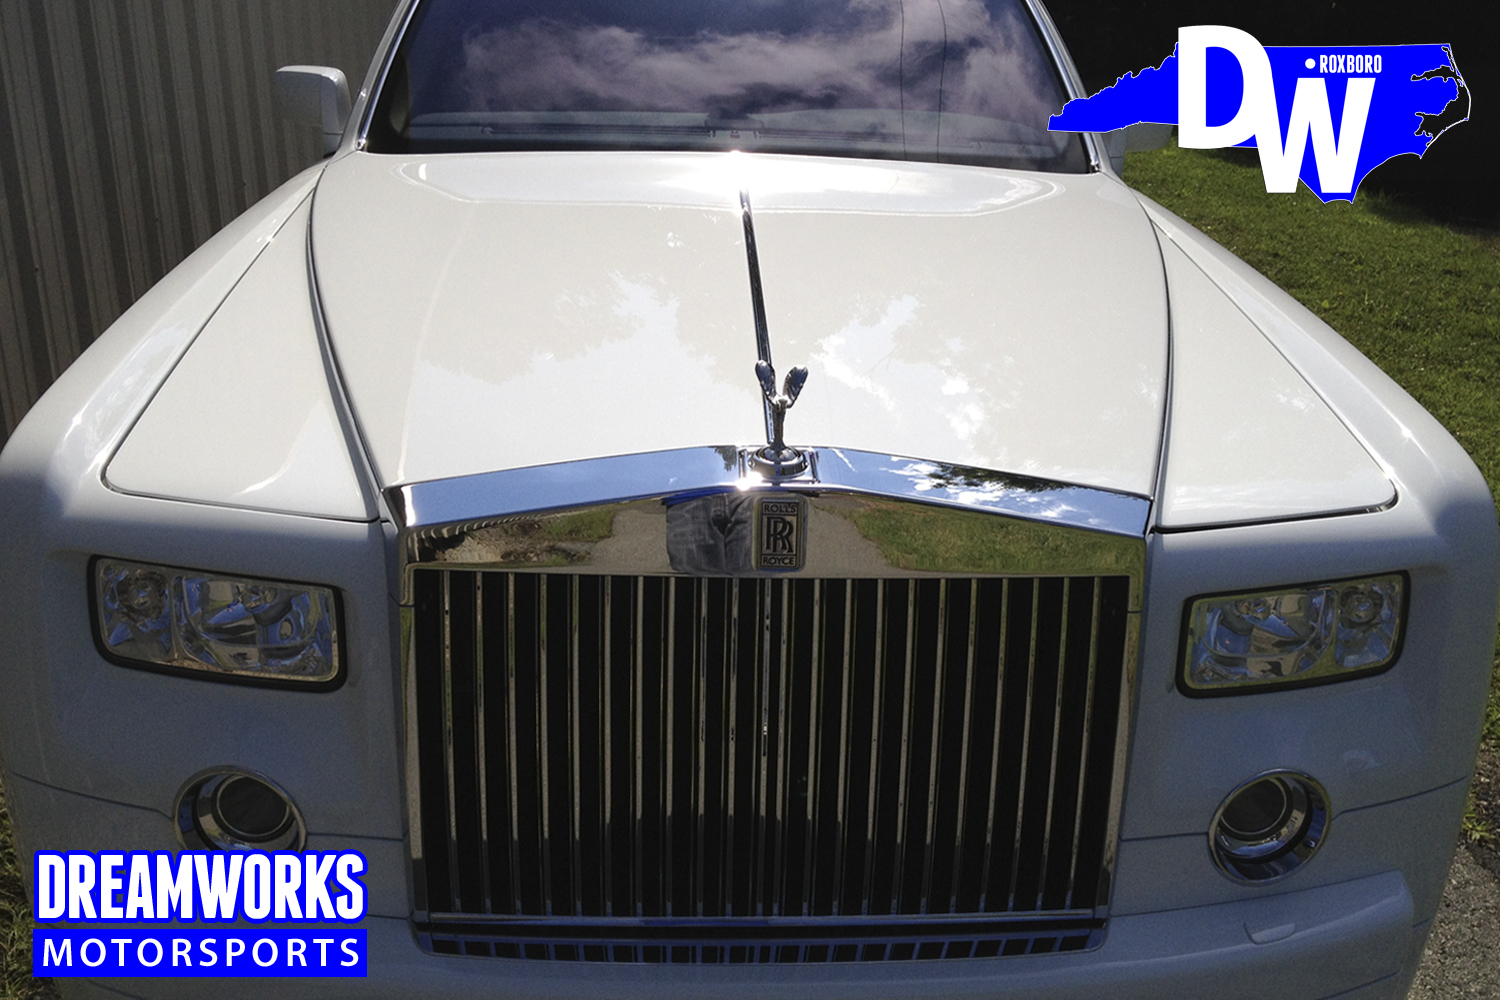 Chris-Wilcox-Rolls-Royce-Phantom-by-Dreamworks-Motorsports-3.jpg